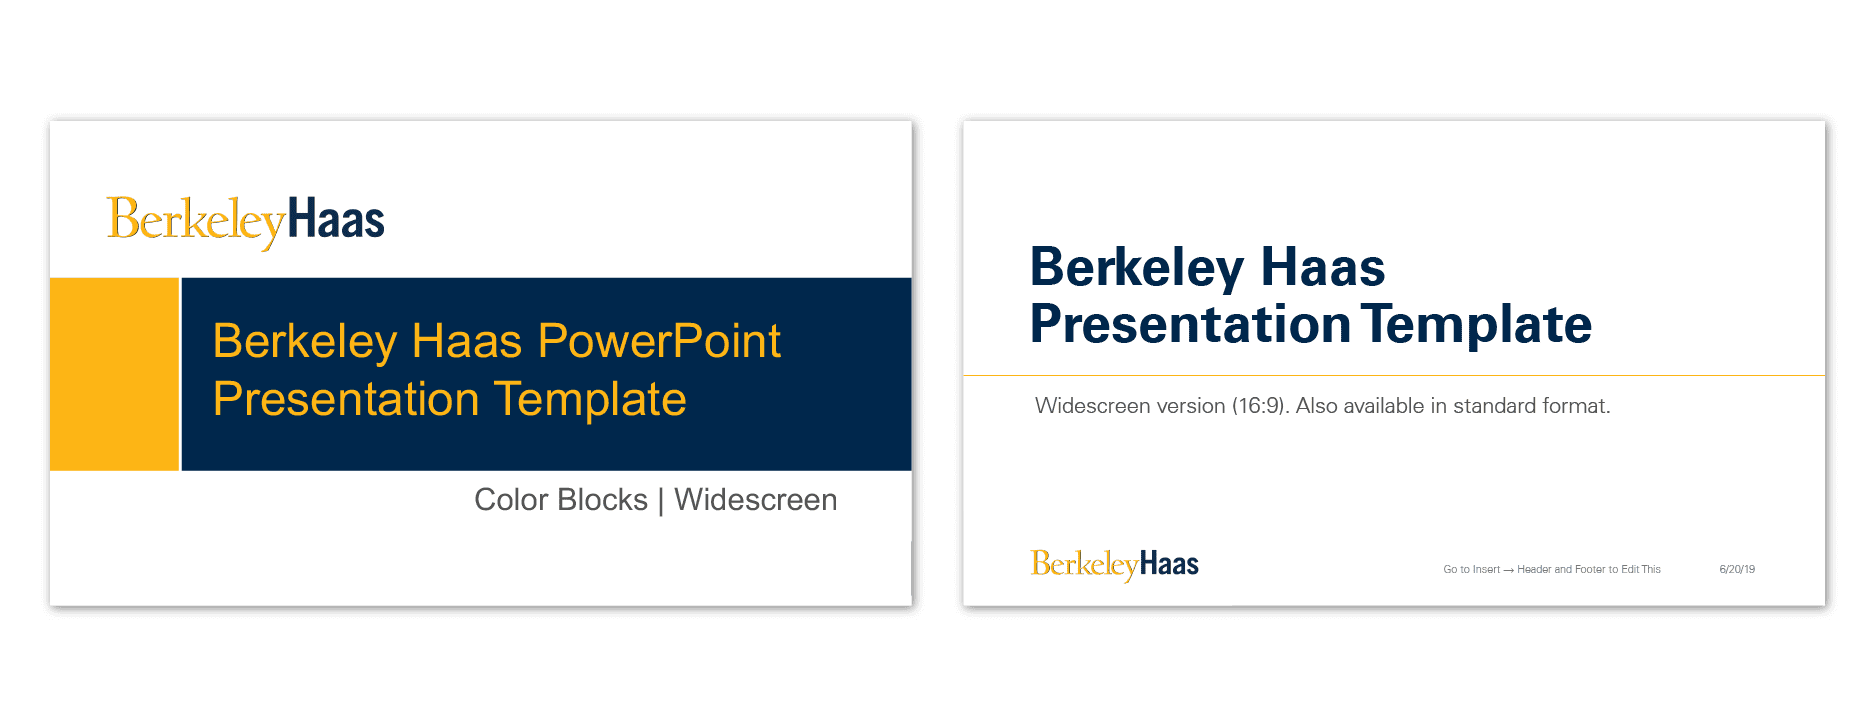 screenshots of Berkeley Haas powerpoint templates